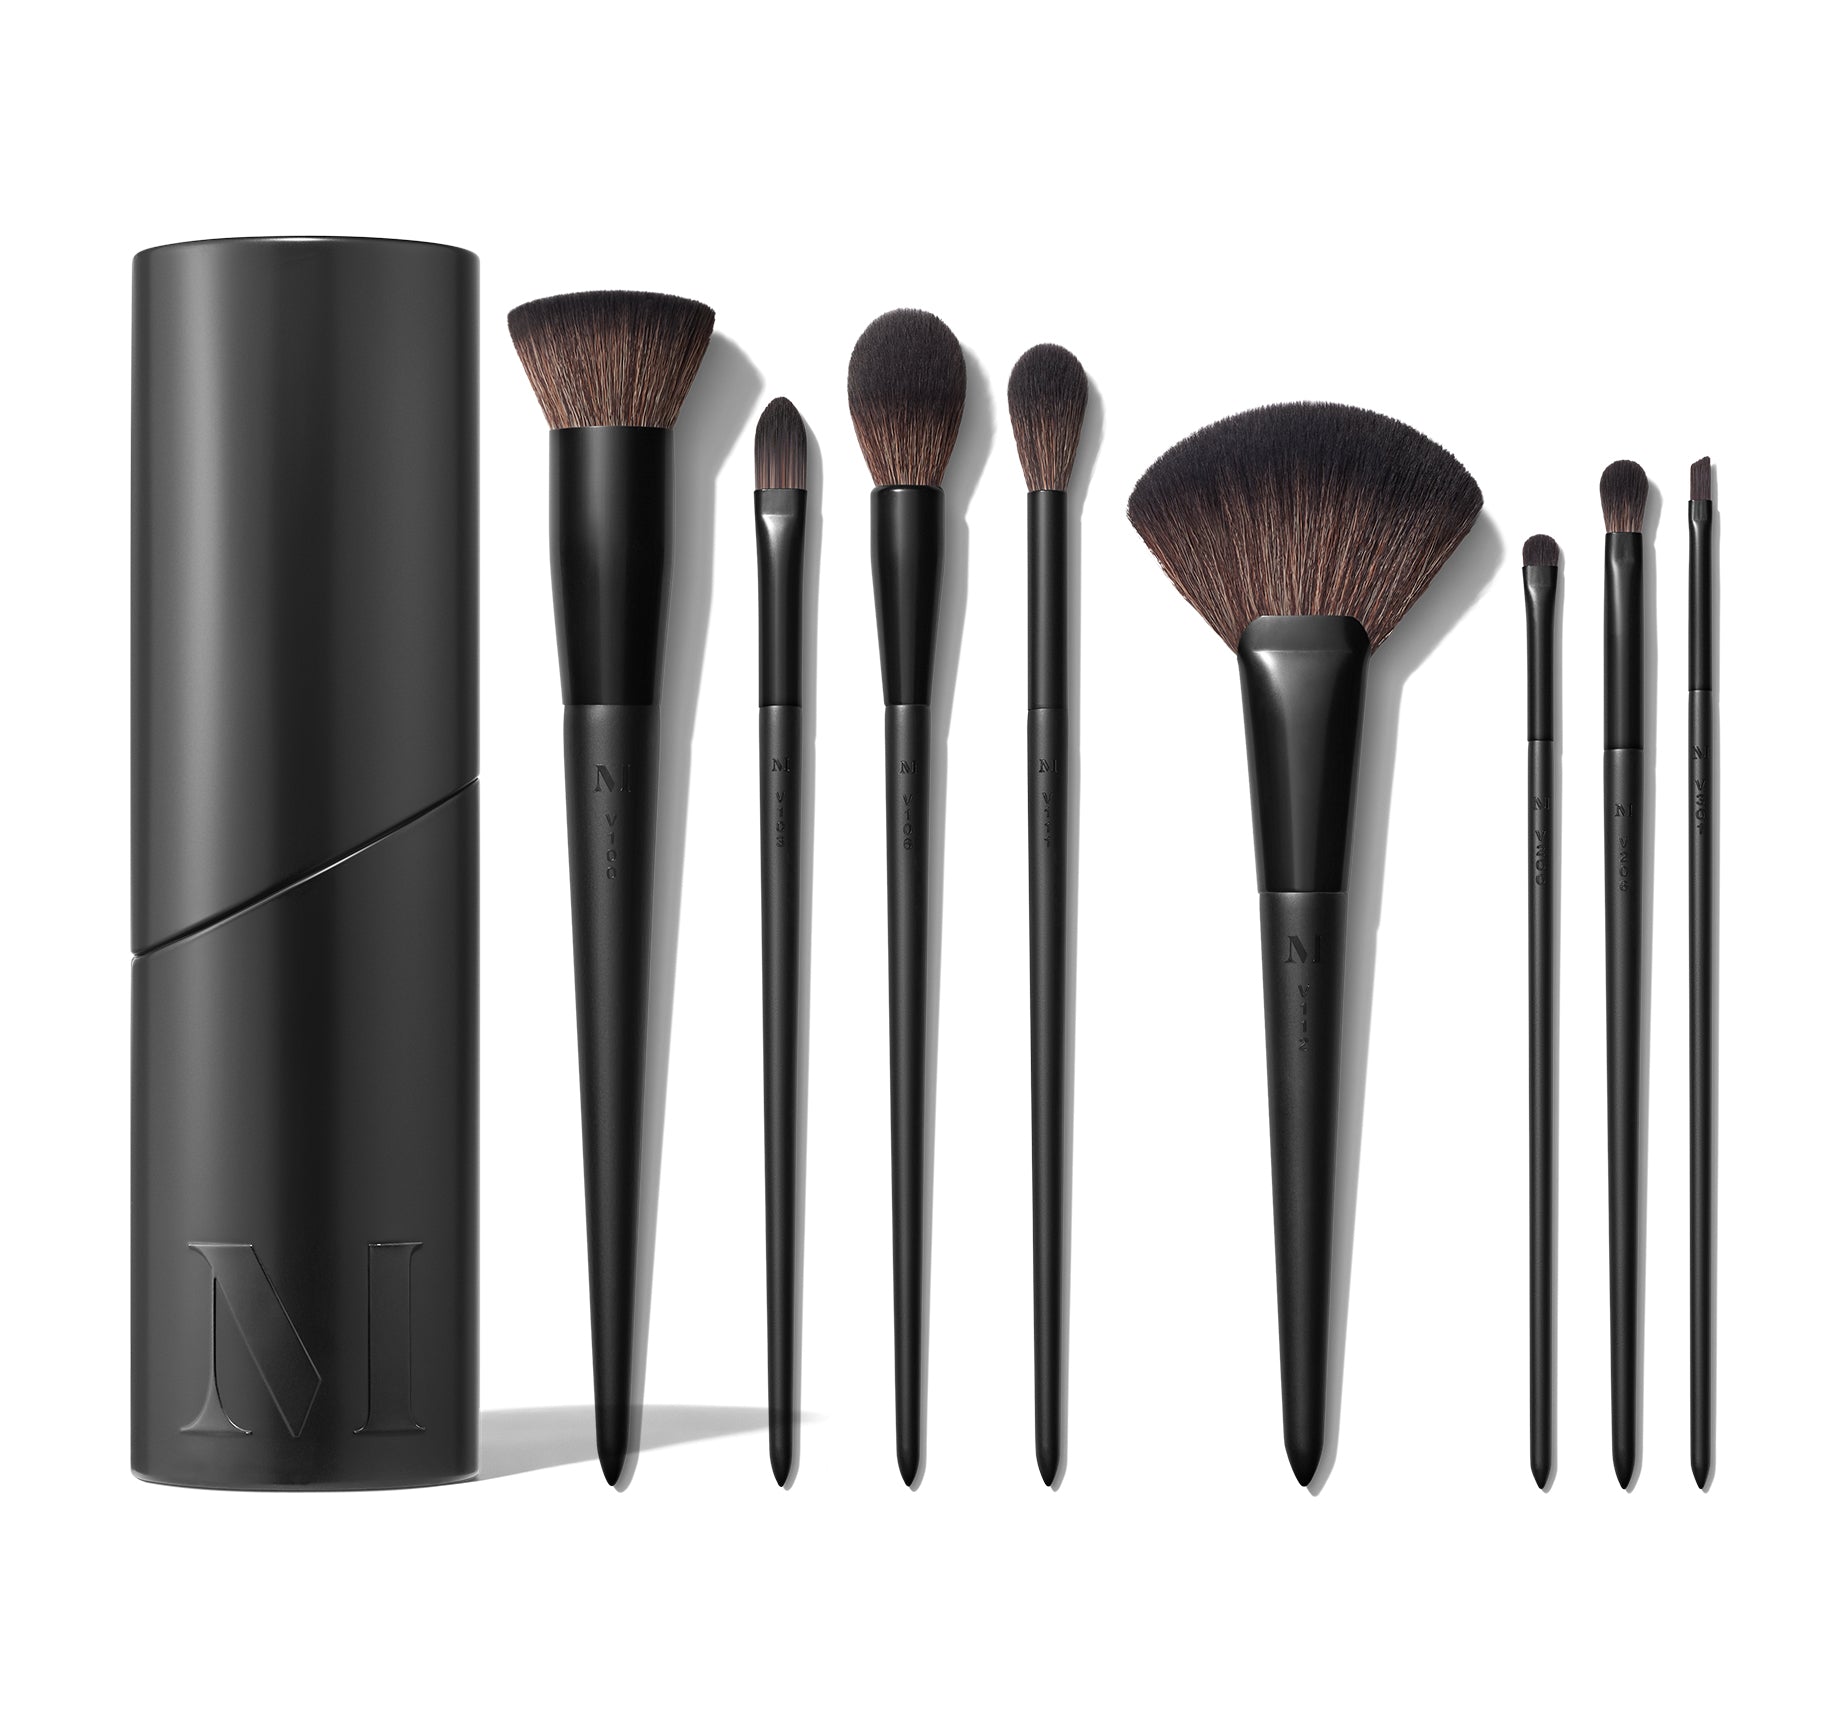 Morphe Vegan Pro 8-Piece Face & Eye Brush Set with Advanced Synthetic Bristles | makeup brushes